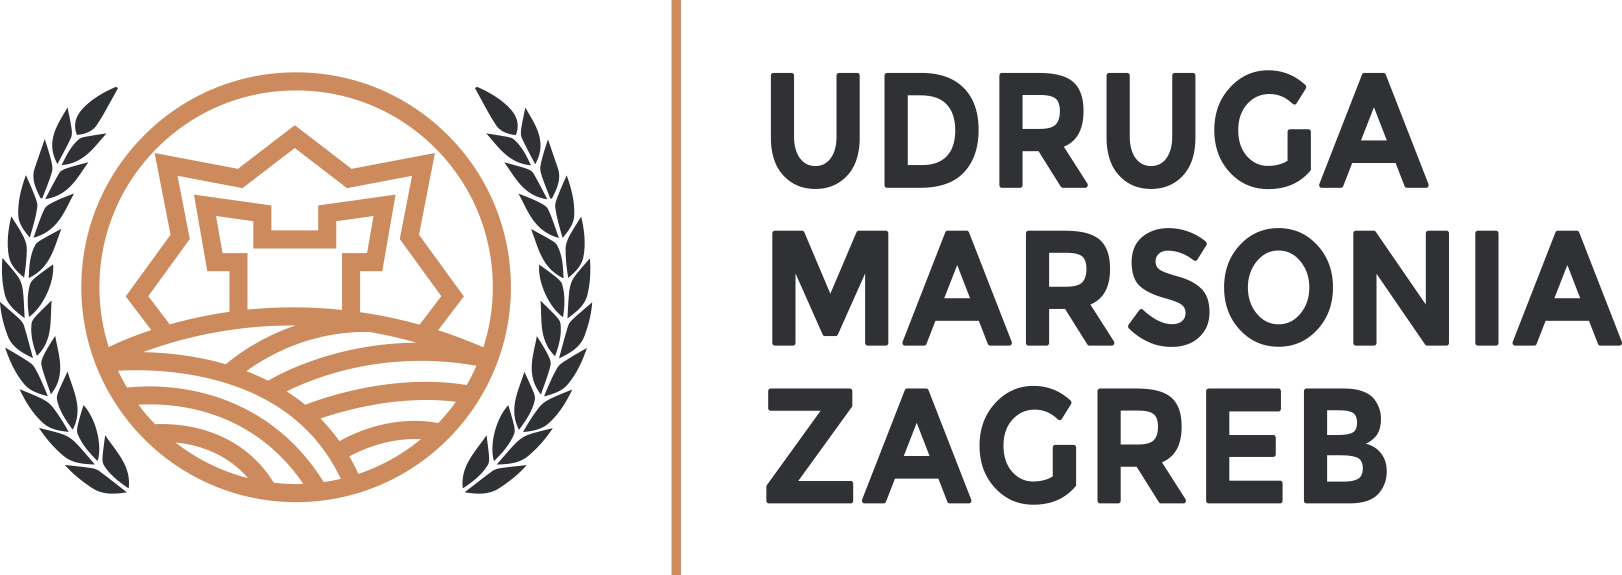 Udruga Marsonia Zagreb